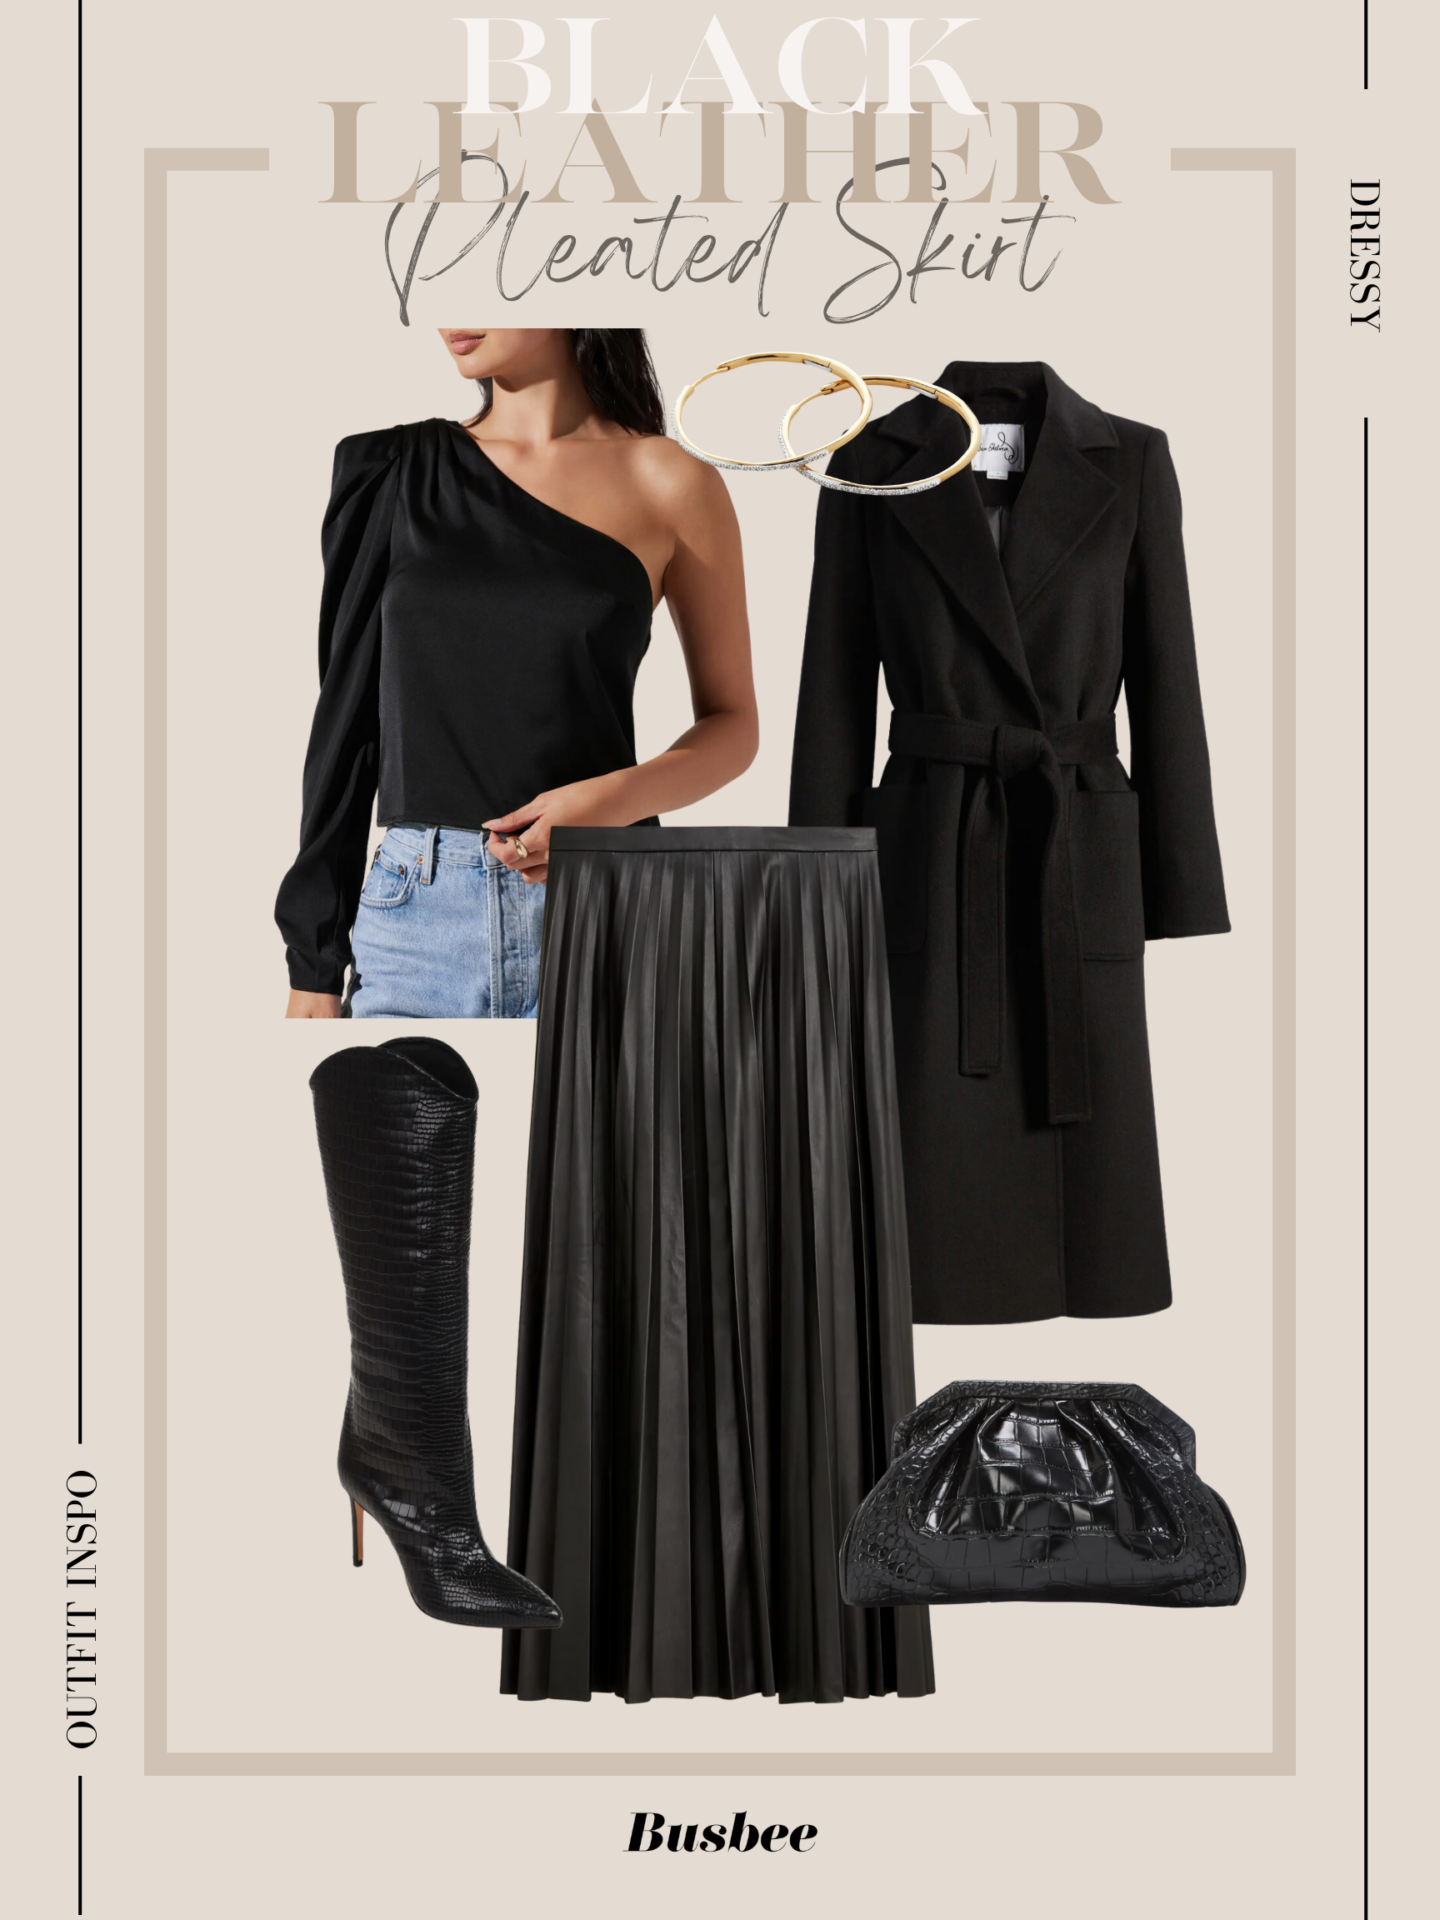 Black Leather Pleated Skirt fashion